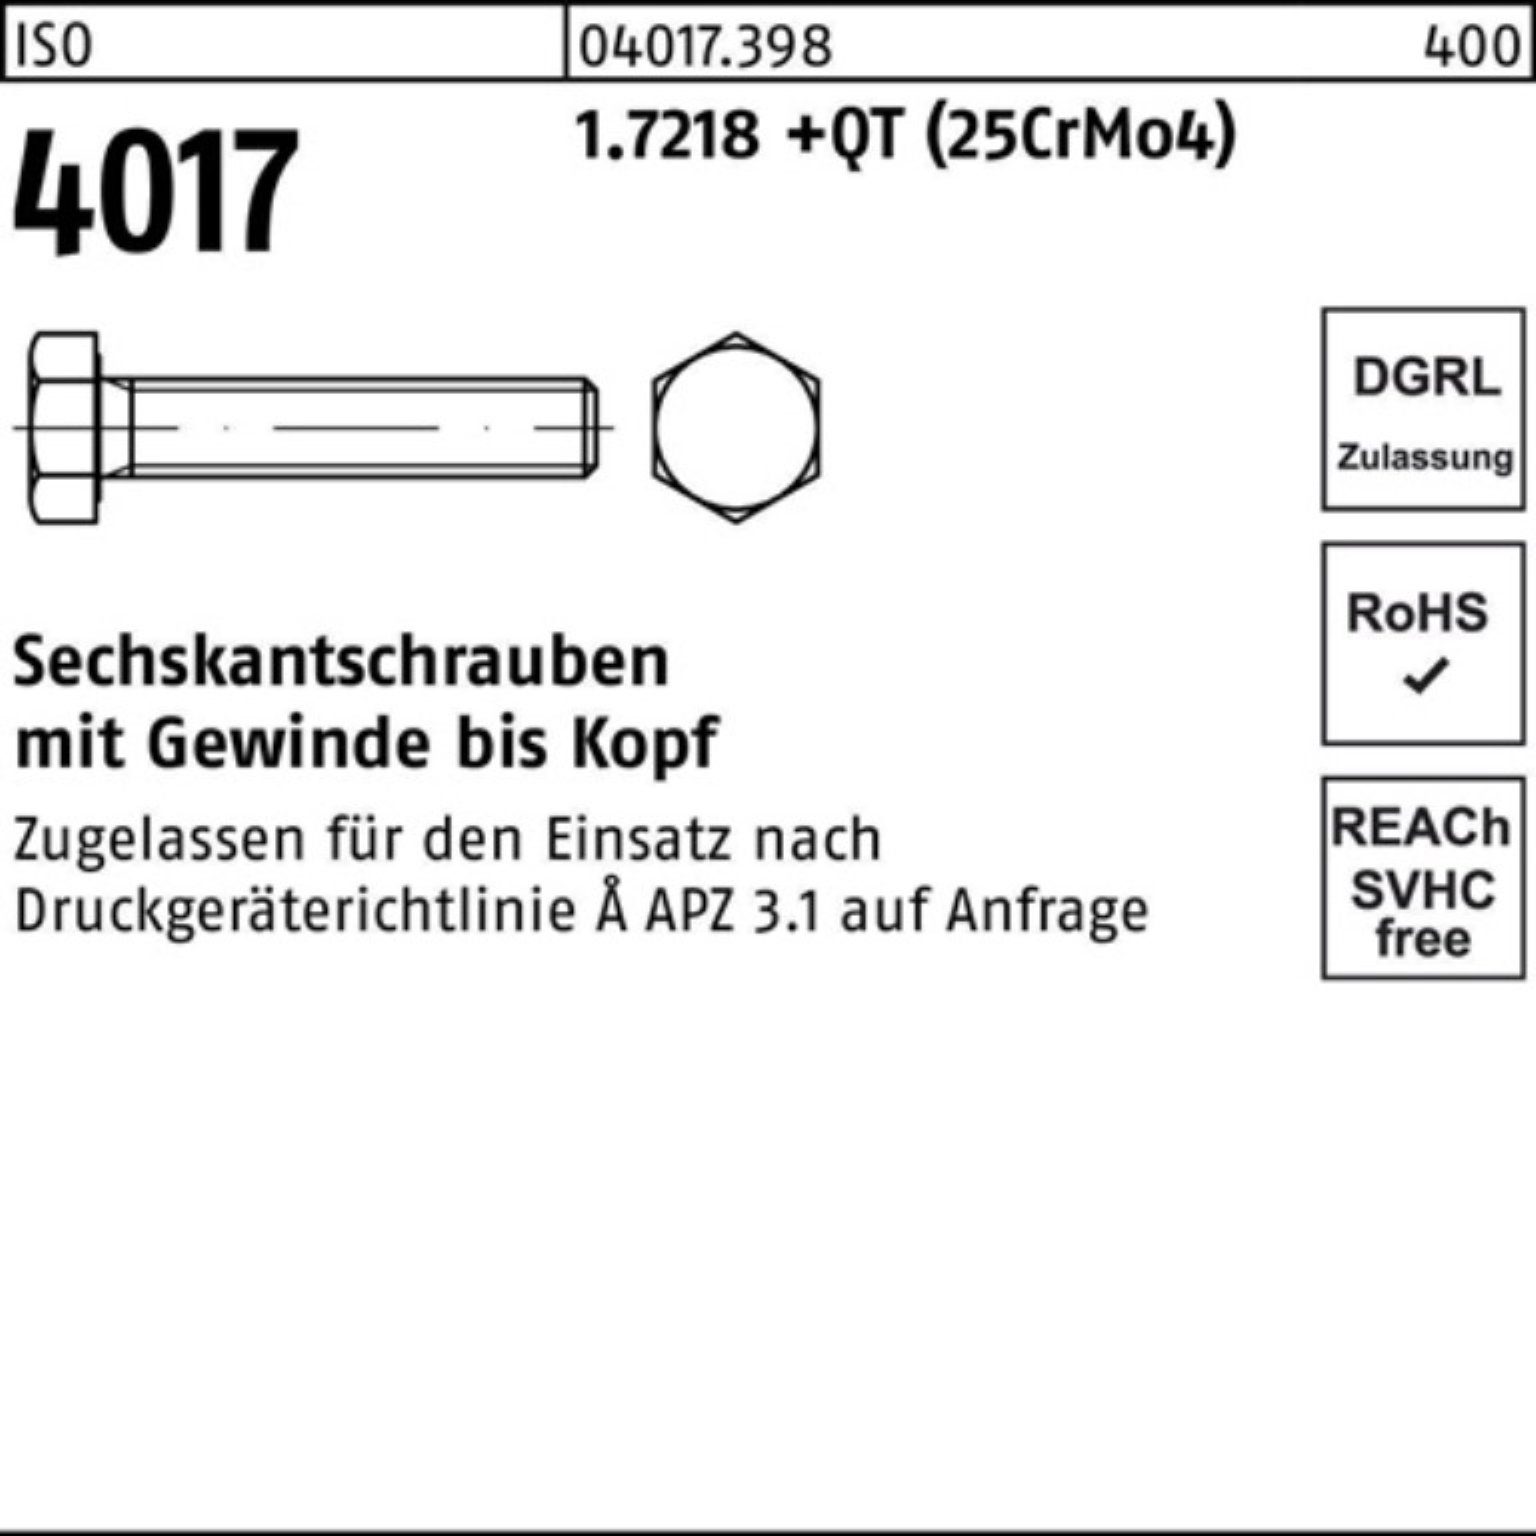 +QT M24x Bufab 55 1.7218 VG 100er (25CrMo4) Sechskantschraube Sechskantschraube Pack ISO 4017